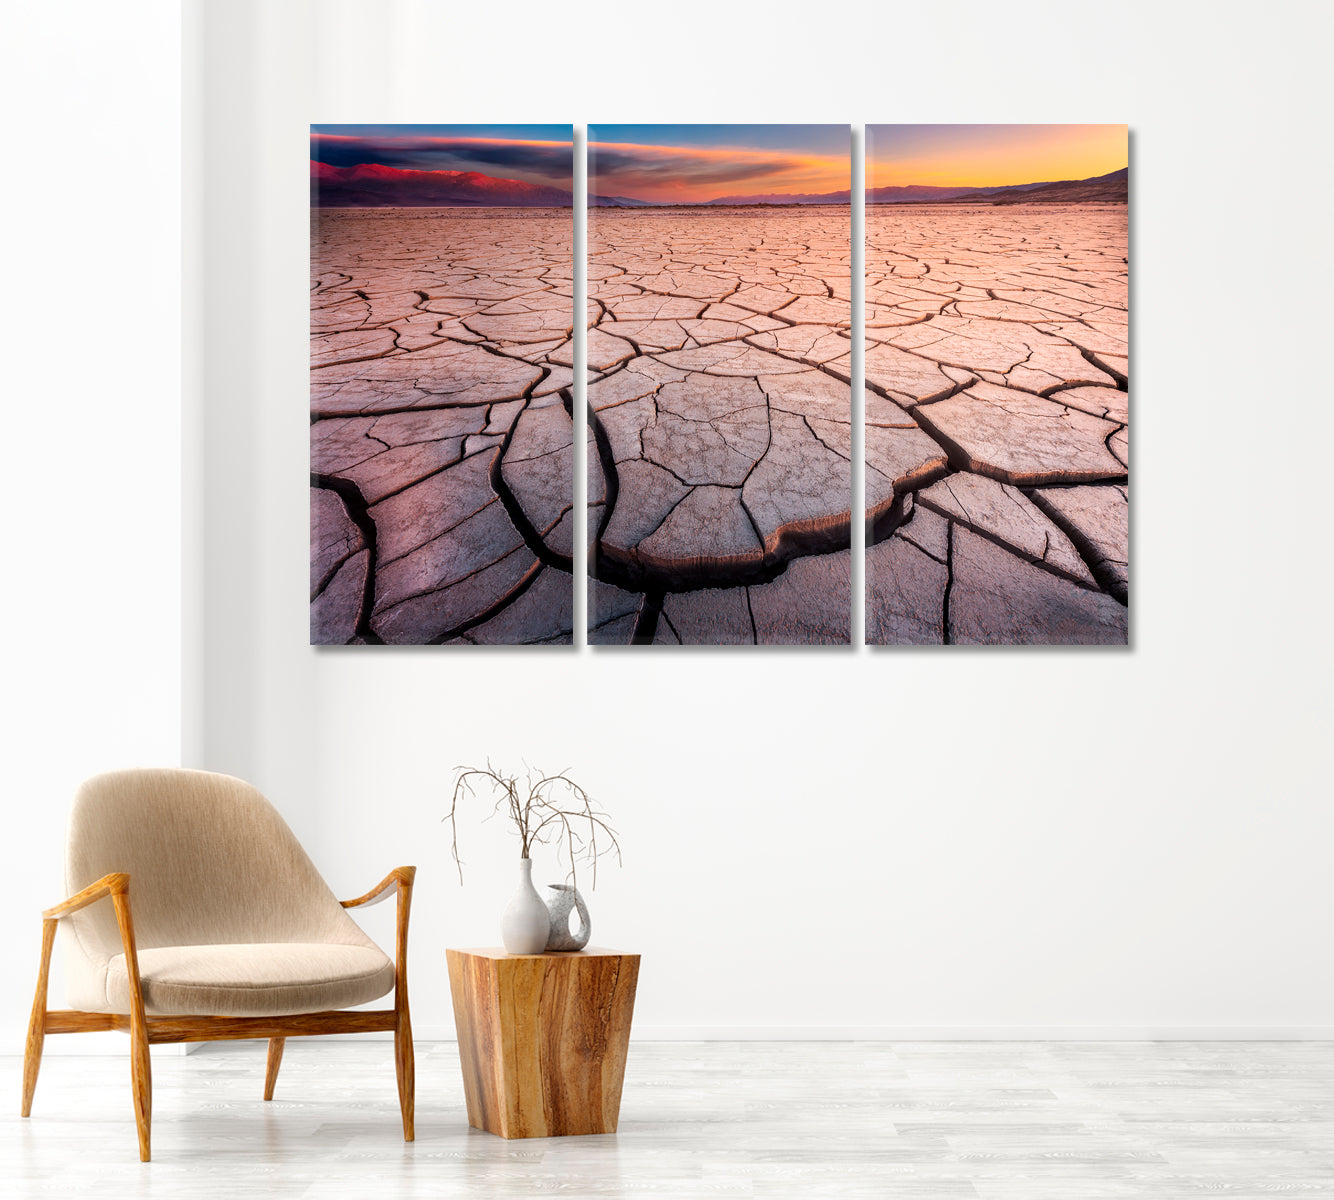 Desert Landscape Cracked Earth Canvas Print-Canvas Print-CetArt-1 Panel-24x16 inches-CetArt